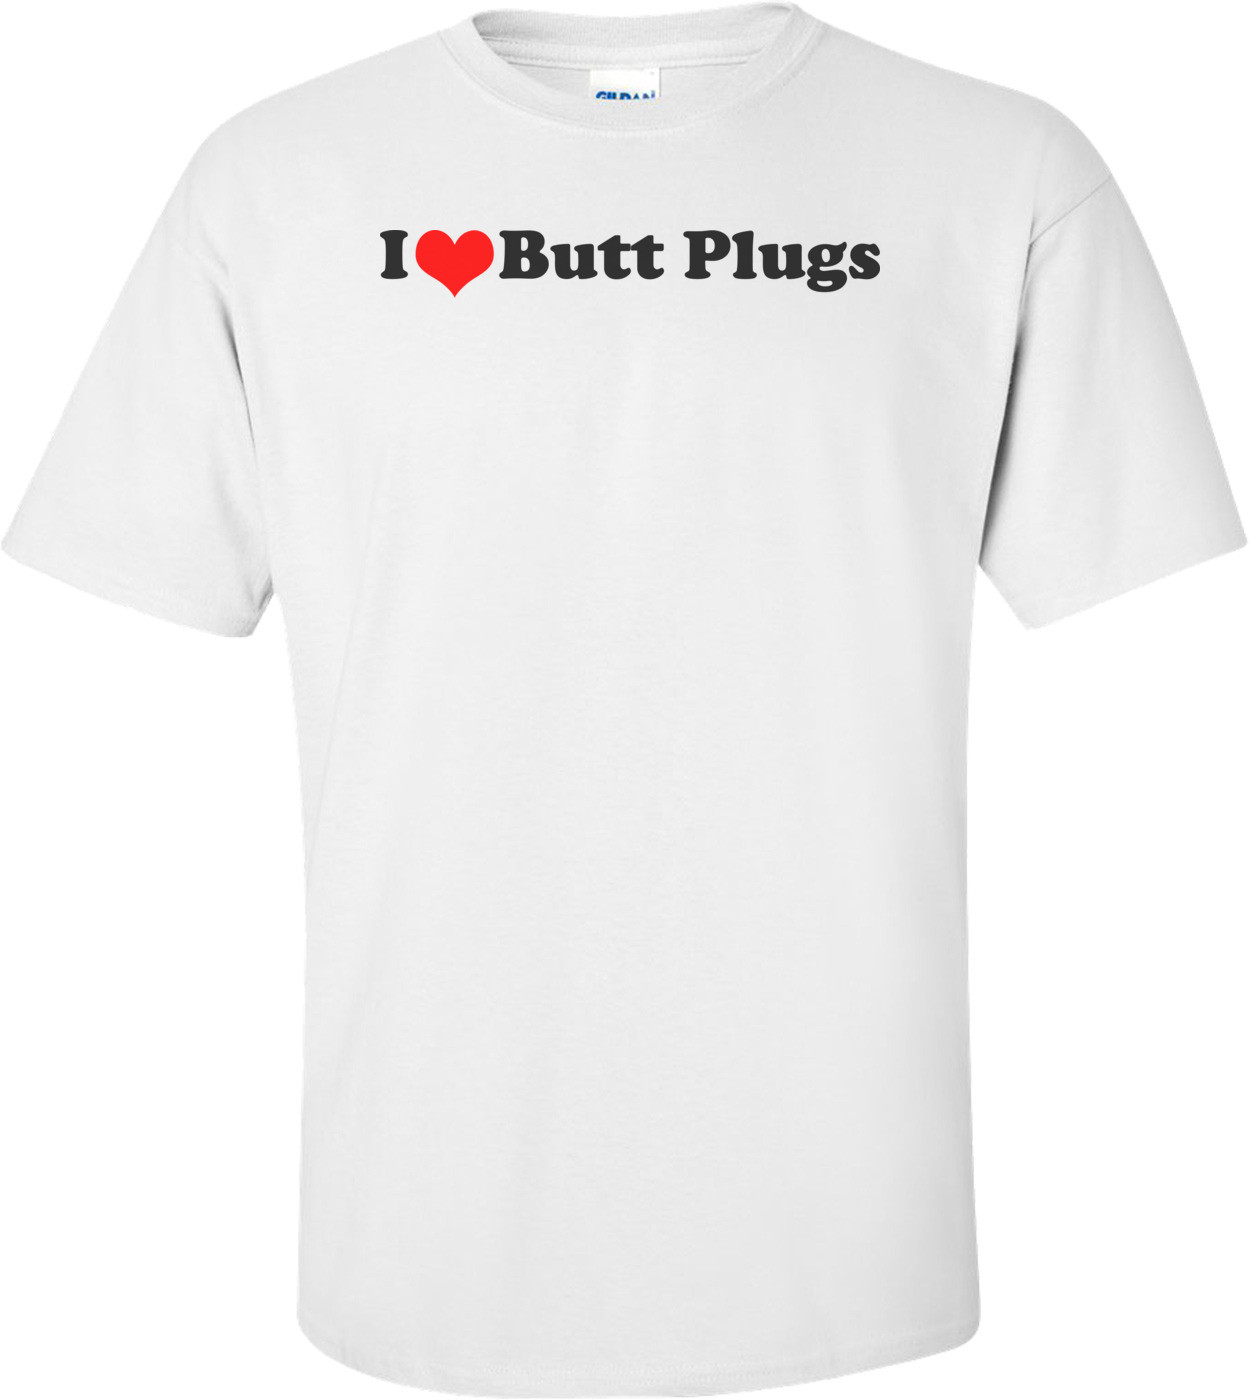 I Love Butt Plugs - Funny